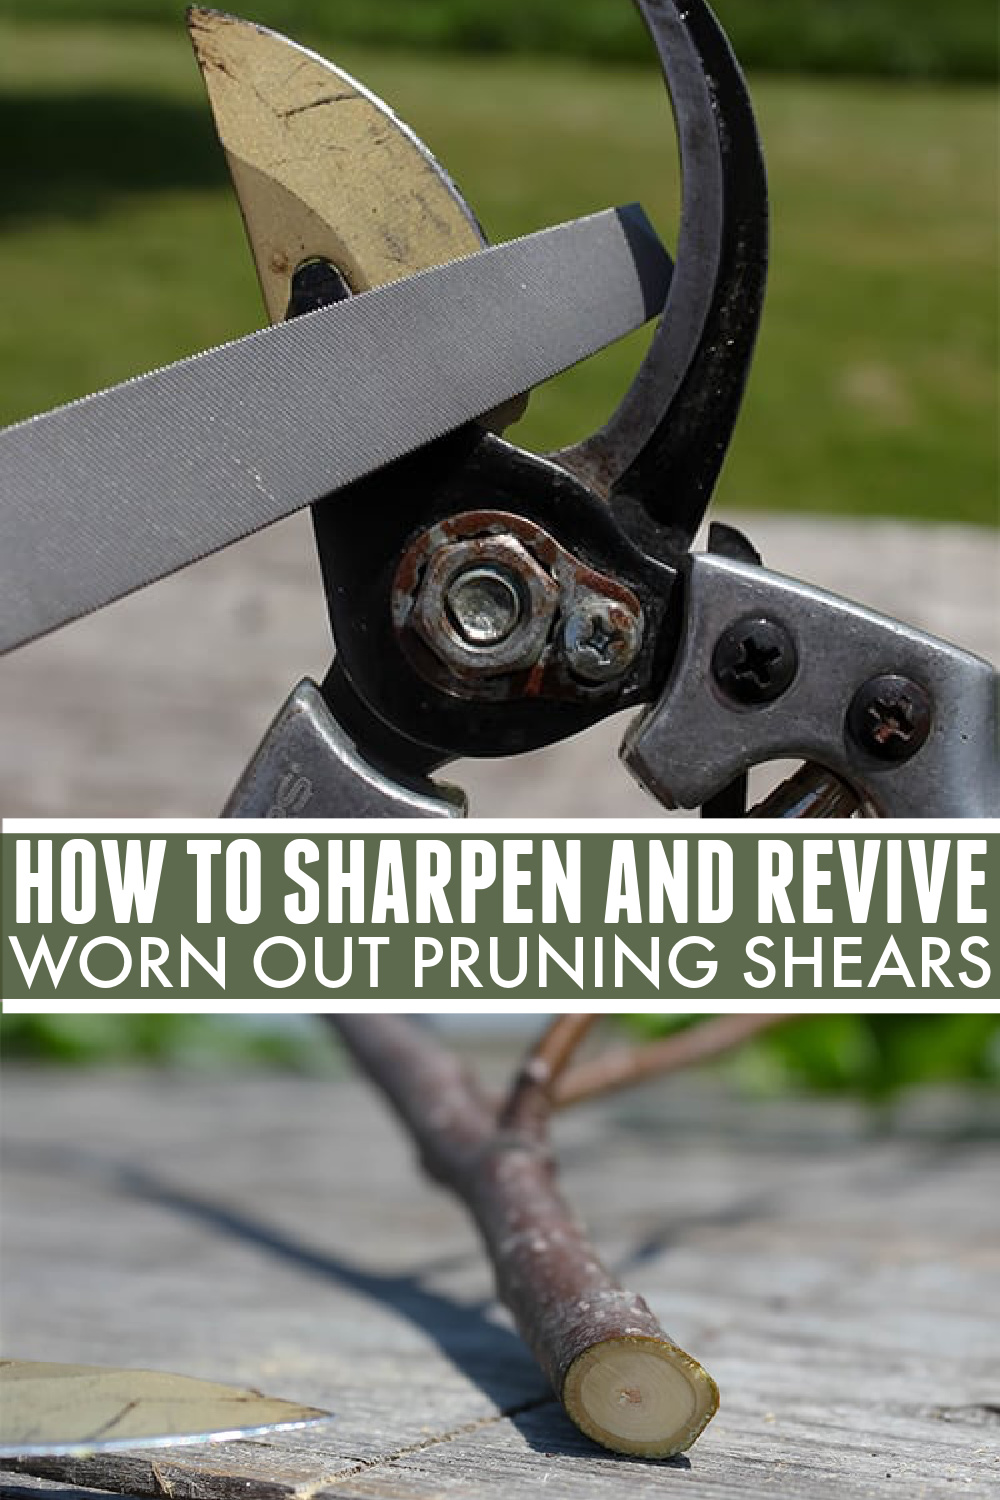 Sharpening pruning shears at home.